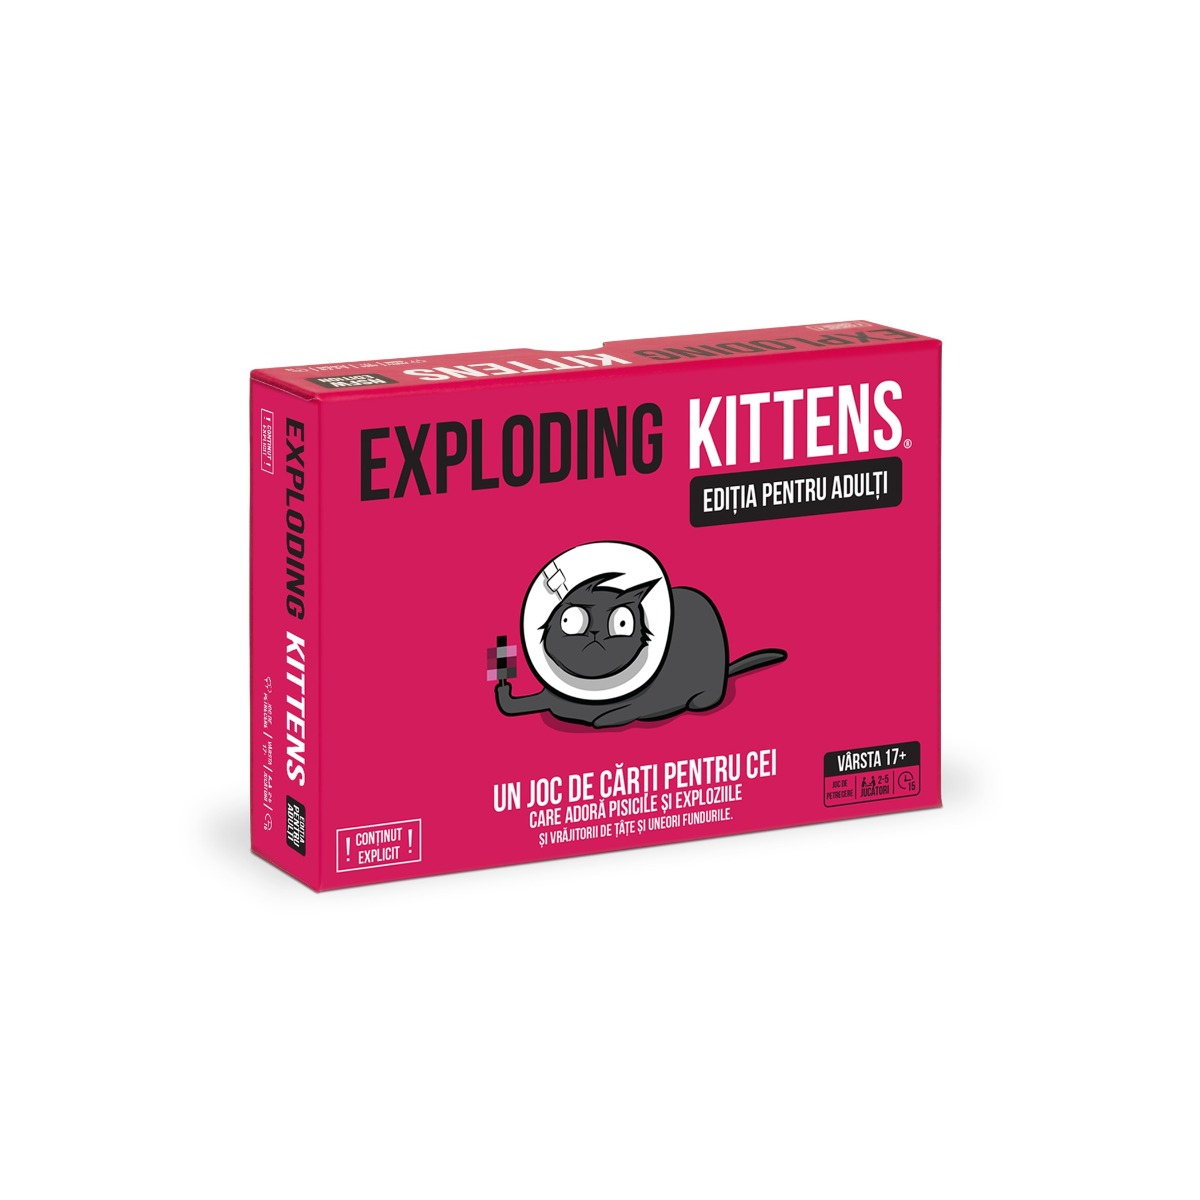 Joc de societate exploding kittens pentru adulti (pink edition), limba romana